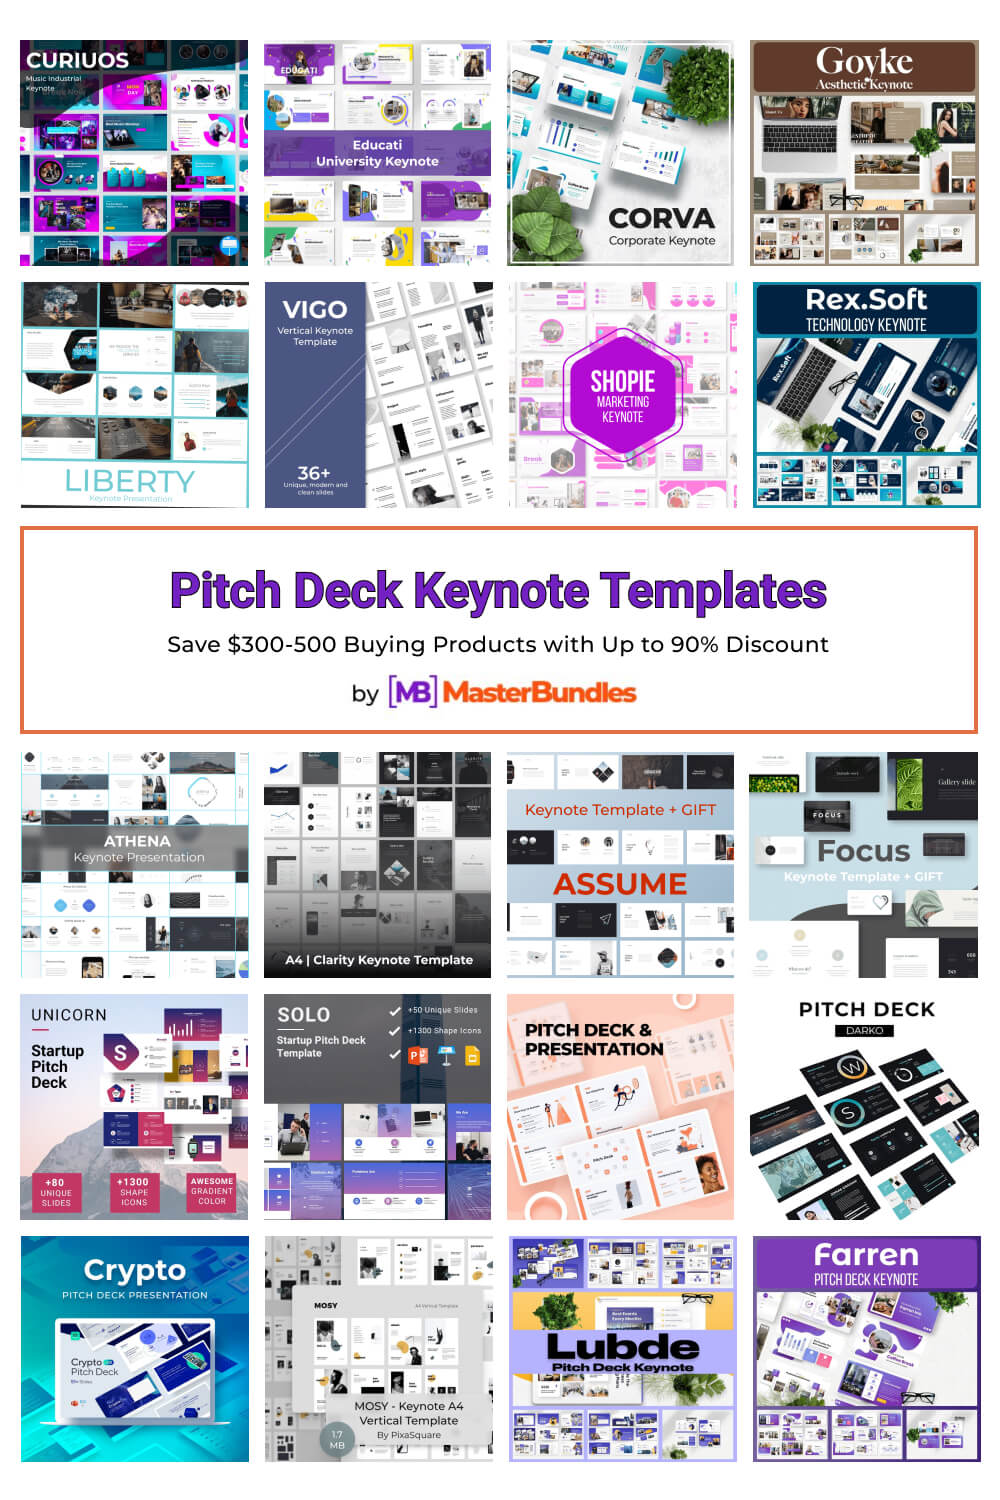 pitch deck keynote templates pinterest image.